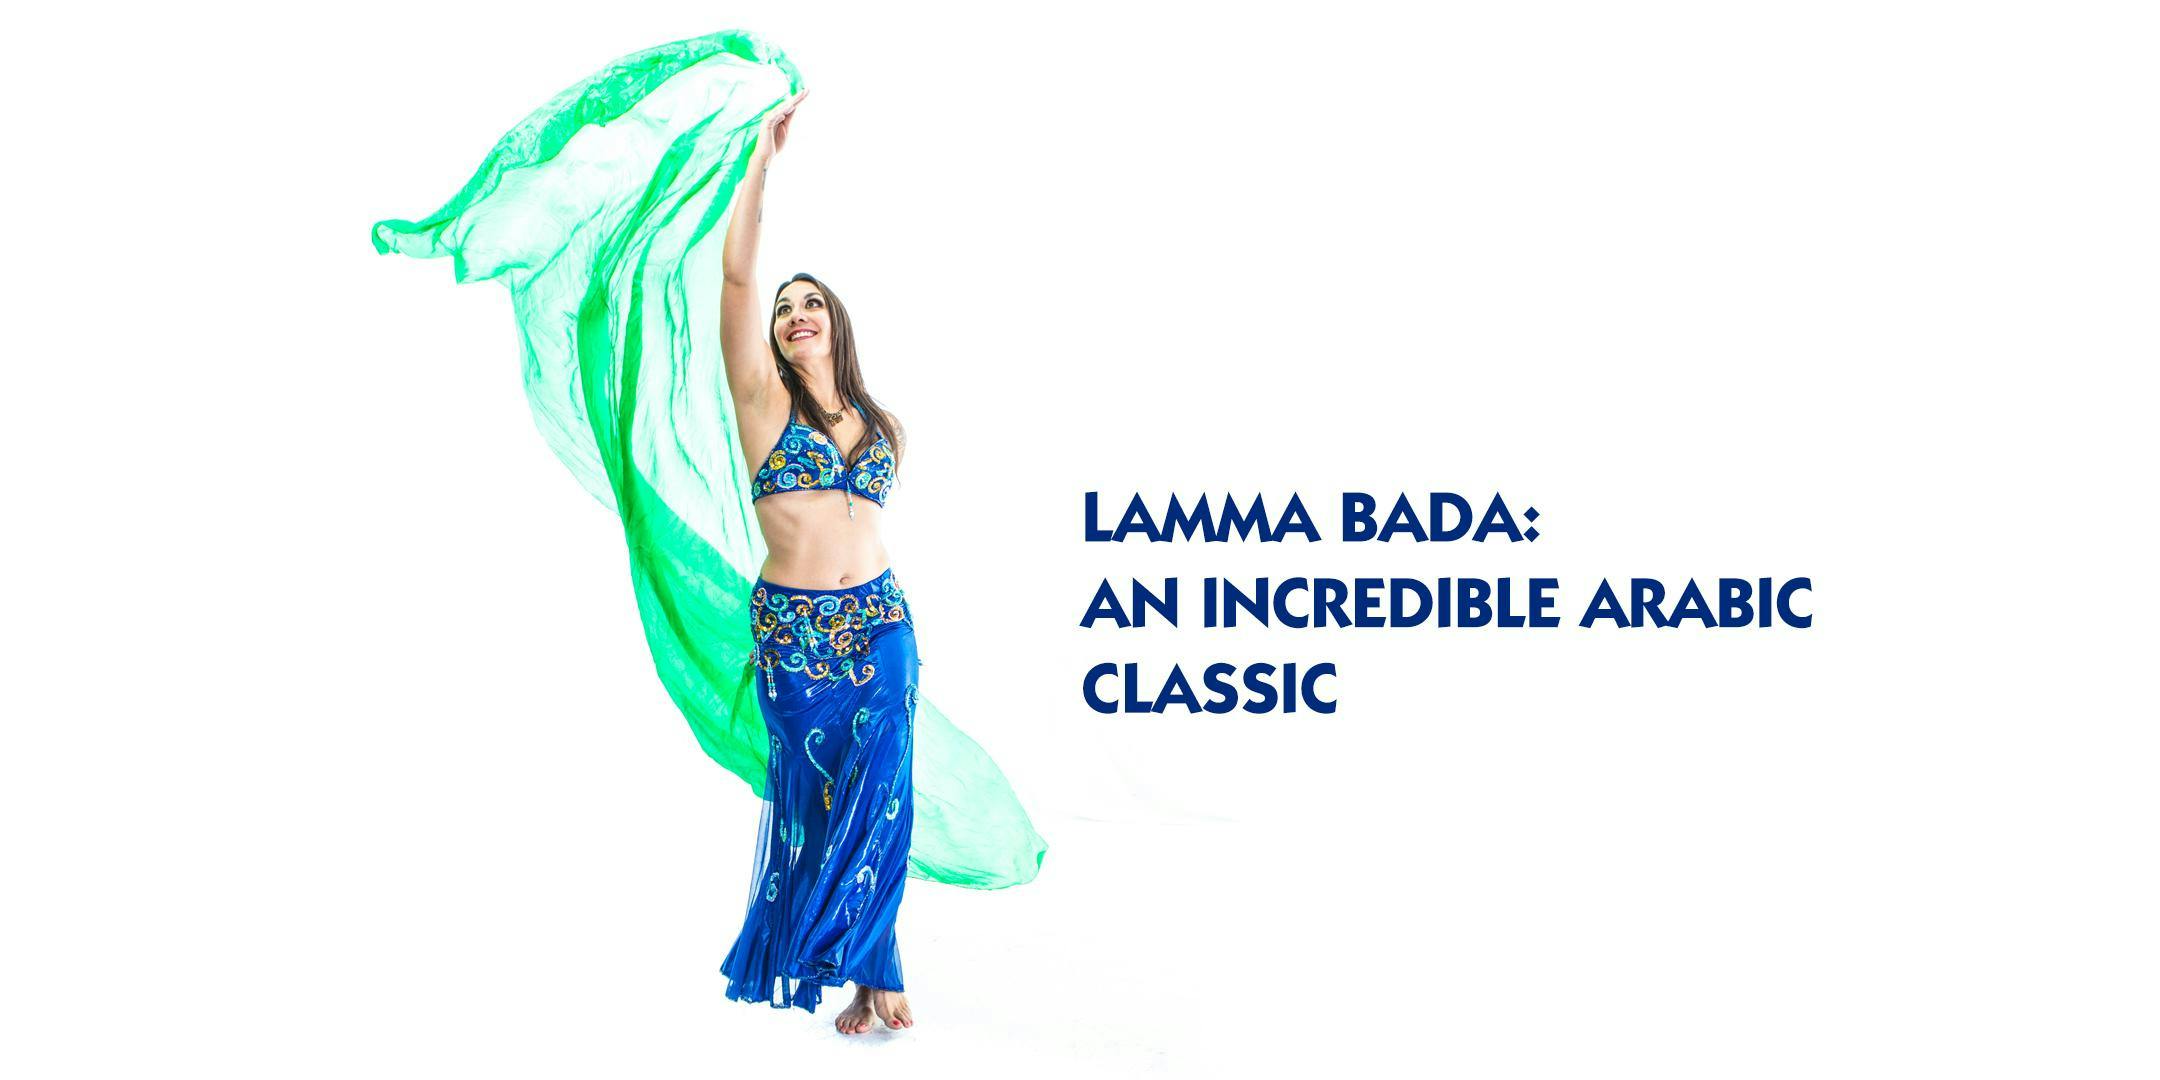 LAMMA BADA: AN INCREDIBLE ARABIC CLASSIC